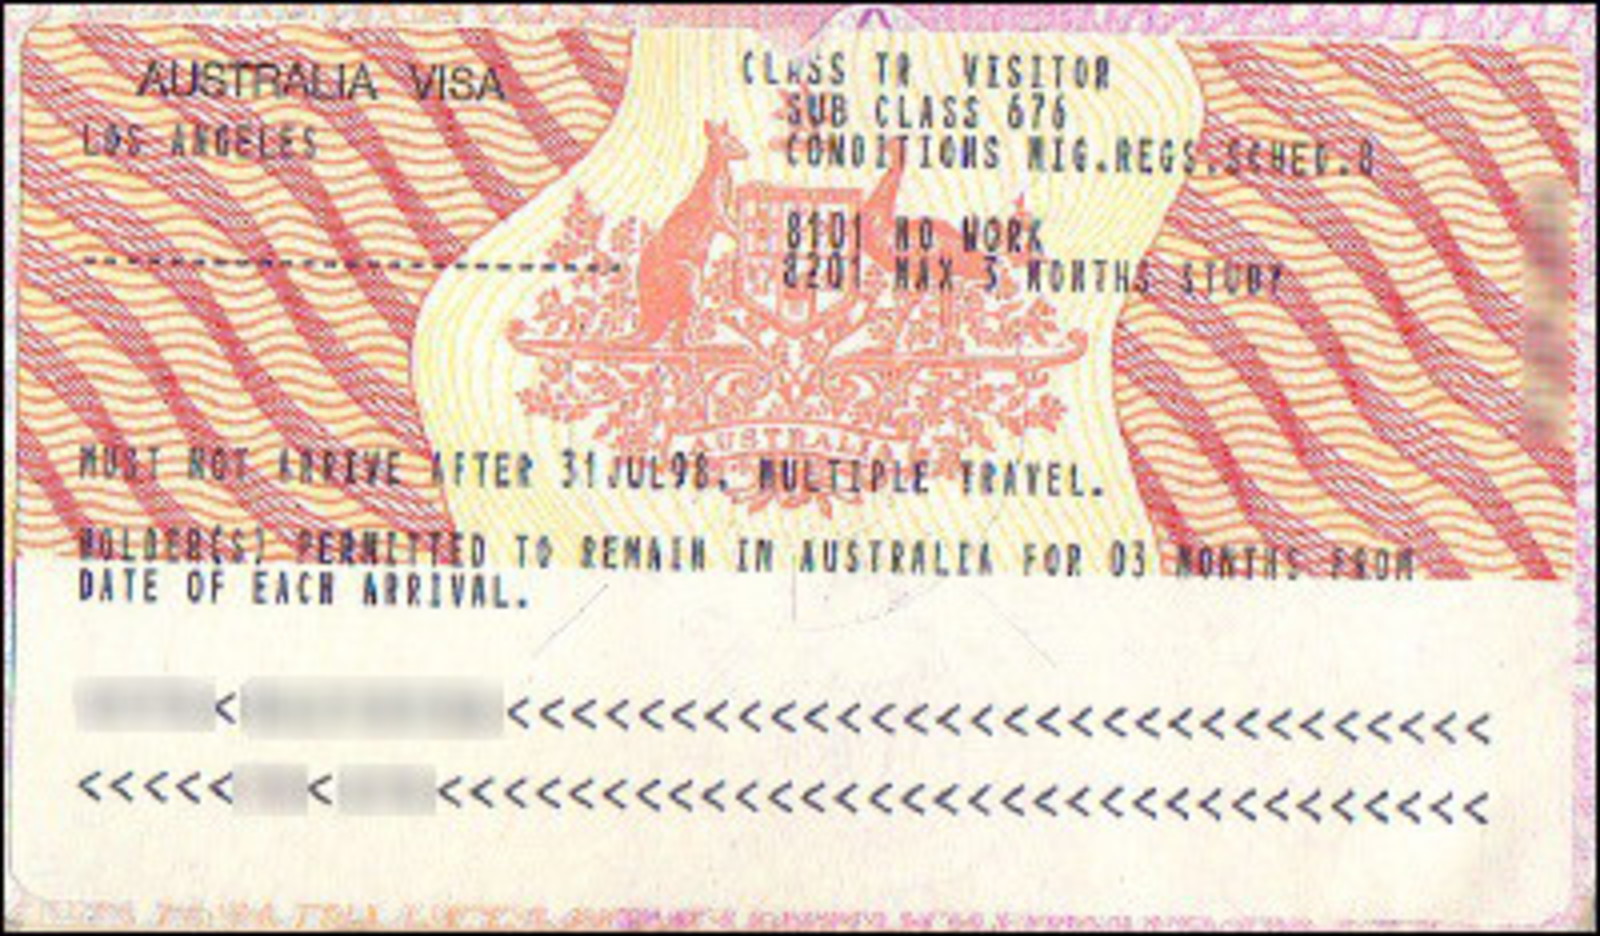 australian tourist visa new passport